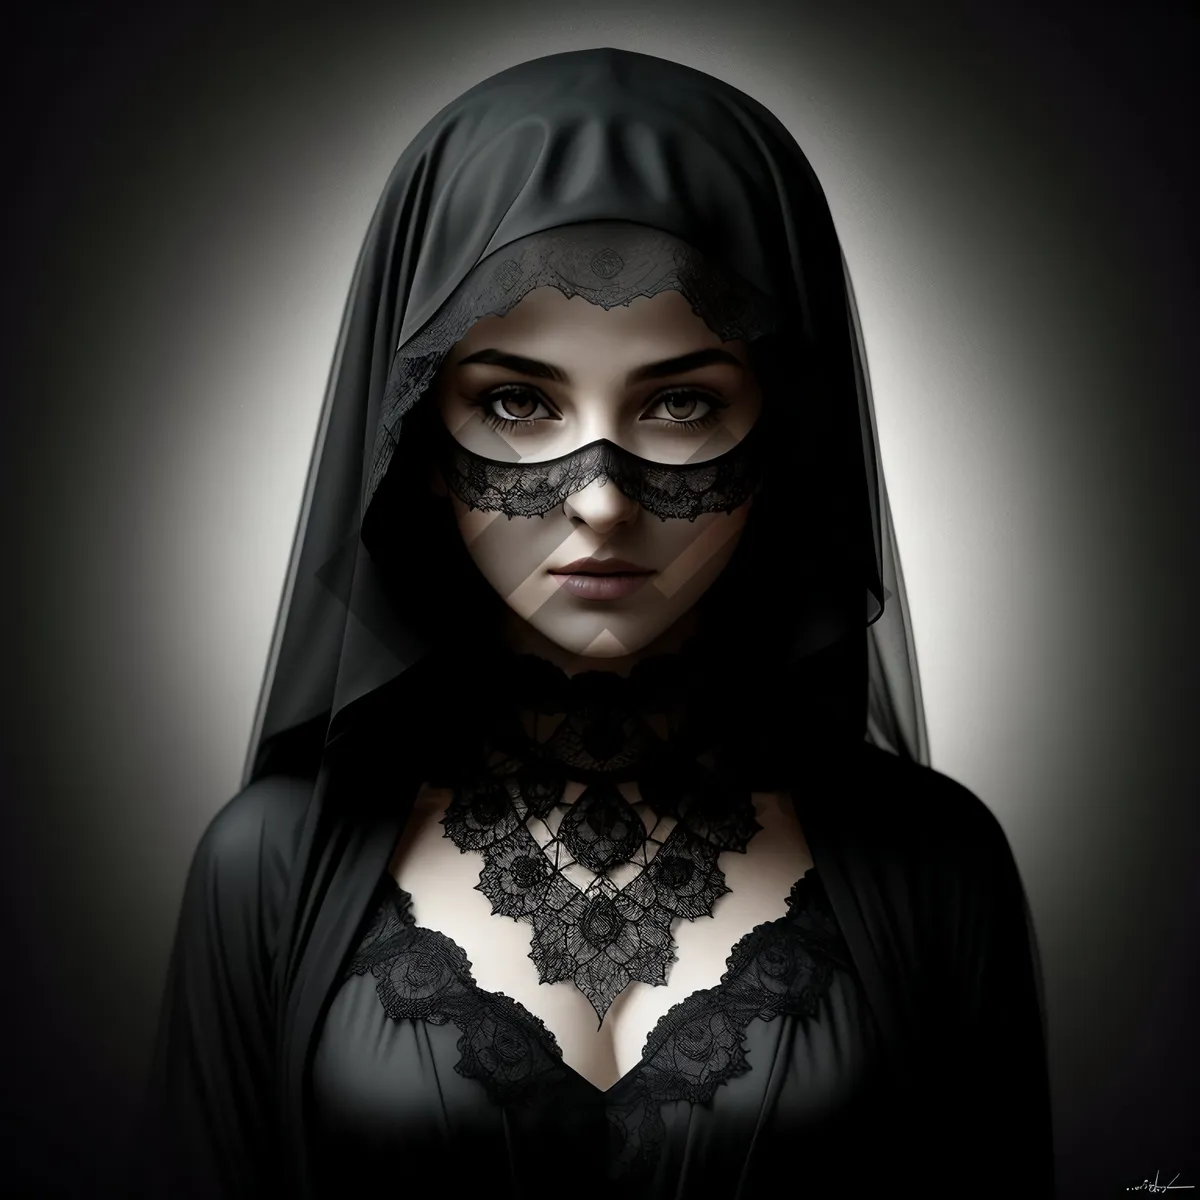 Picture of Stylish Venetian Mask Lady: A Seductive Garment